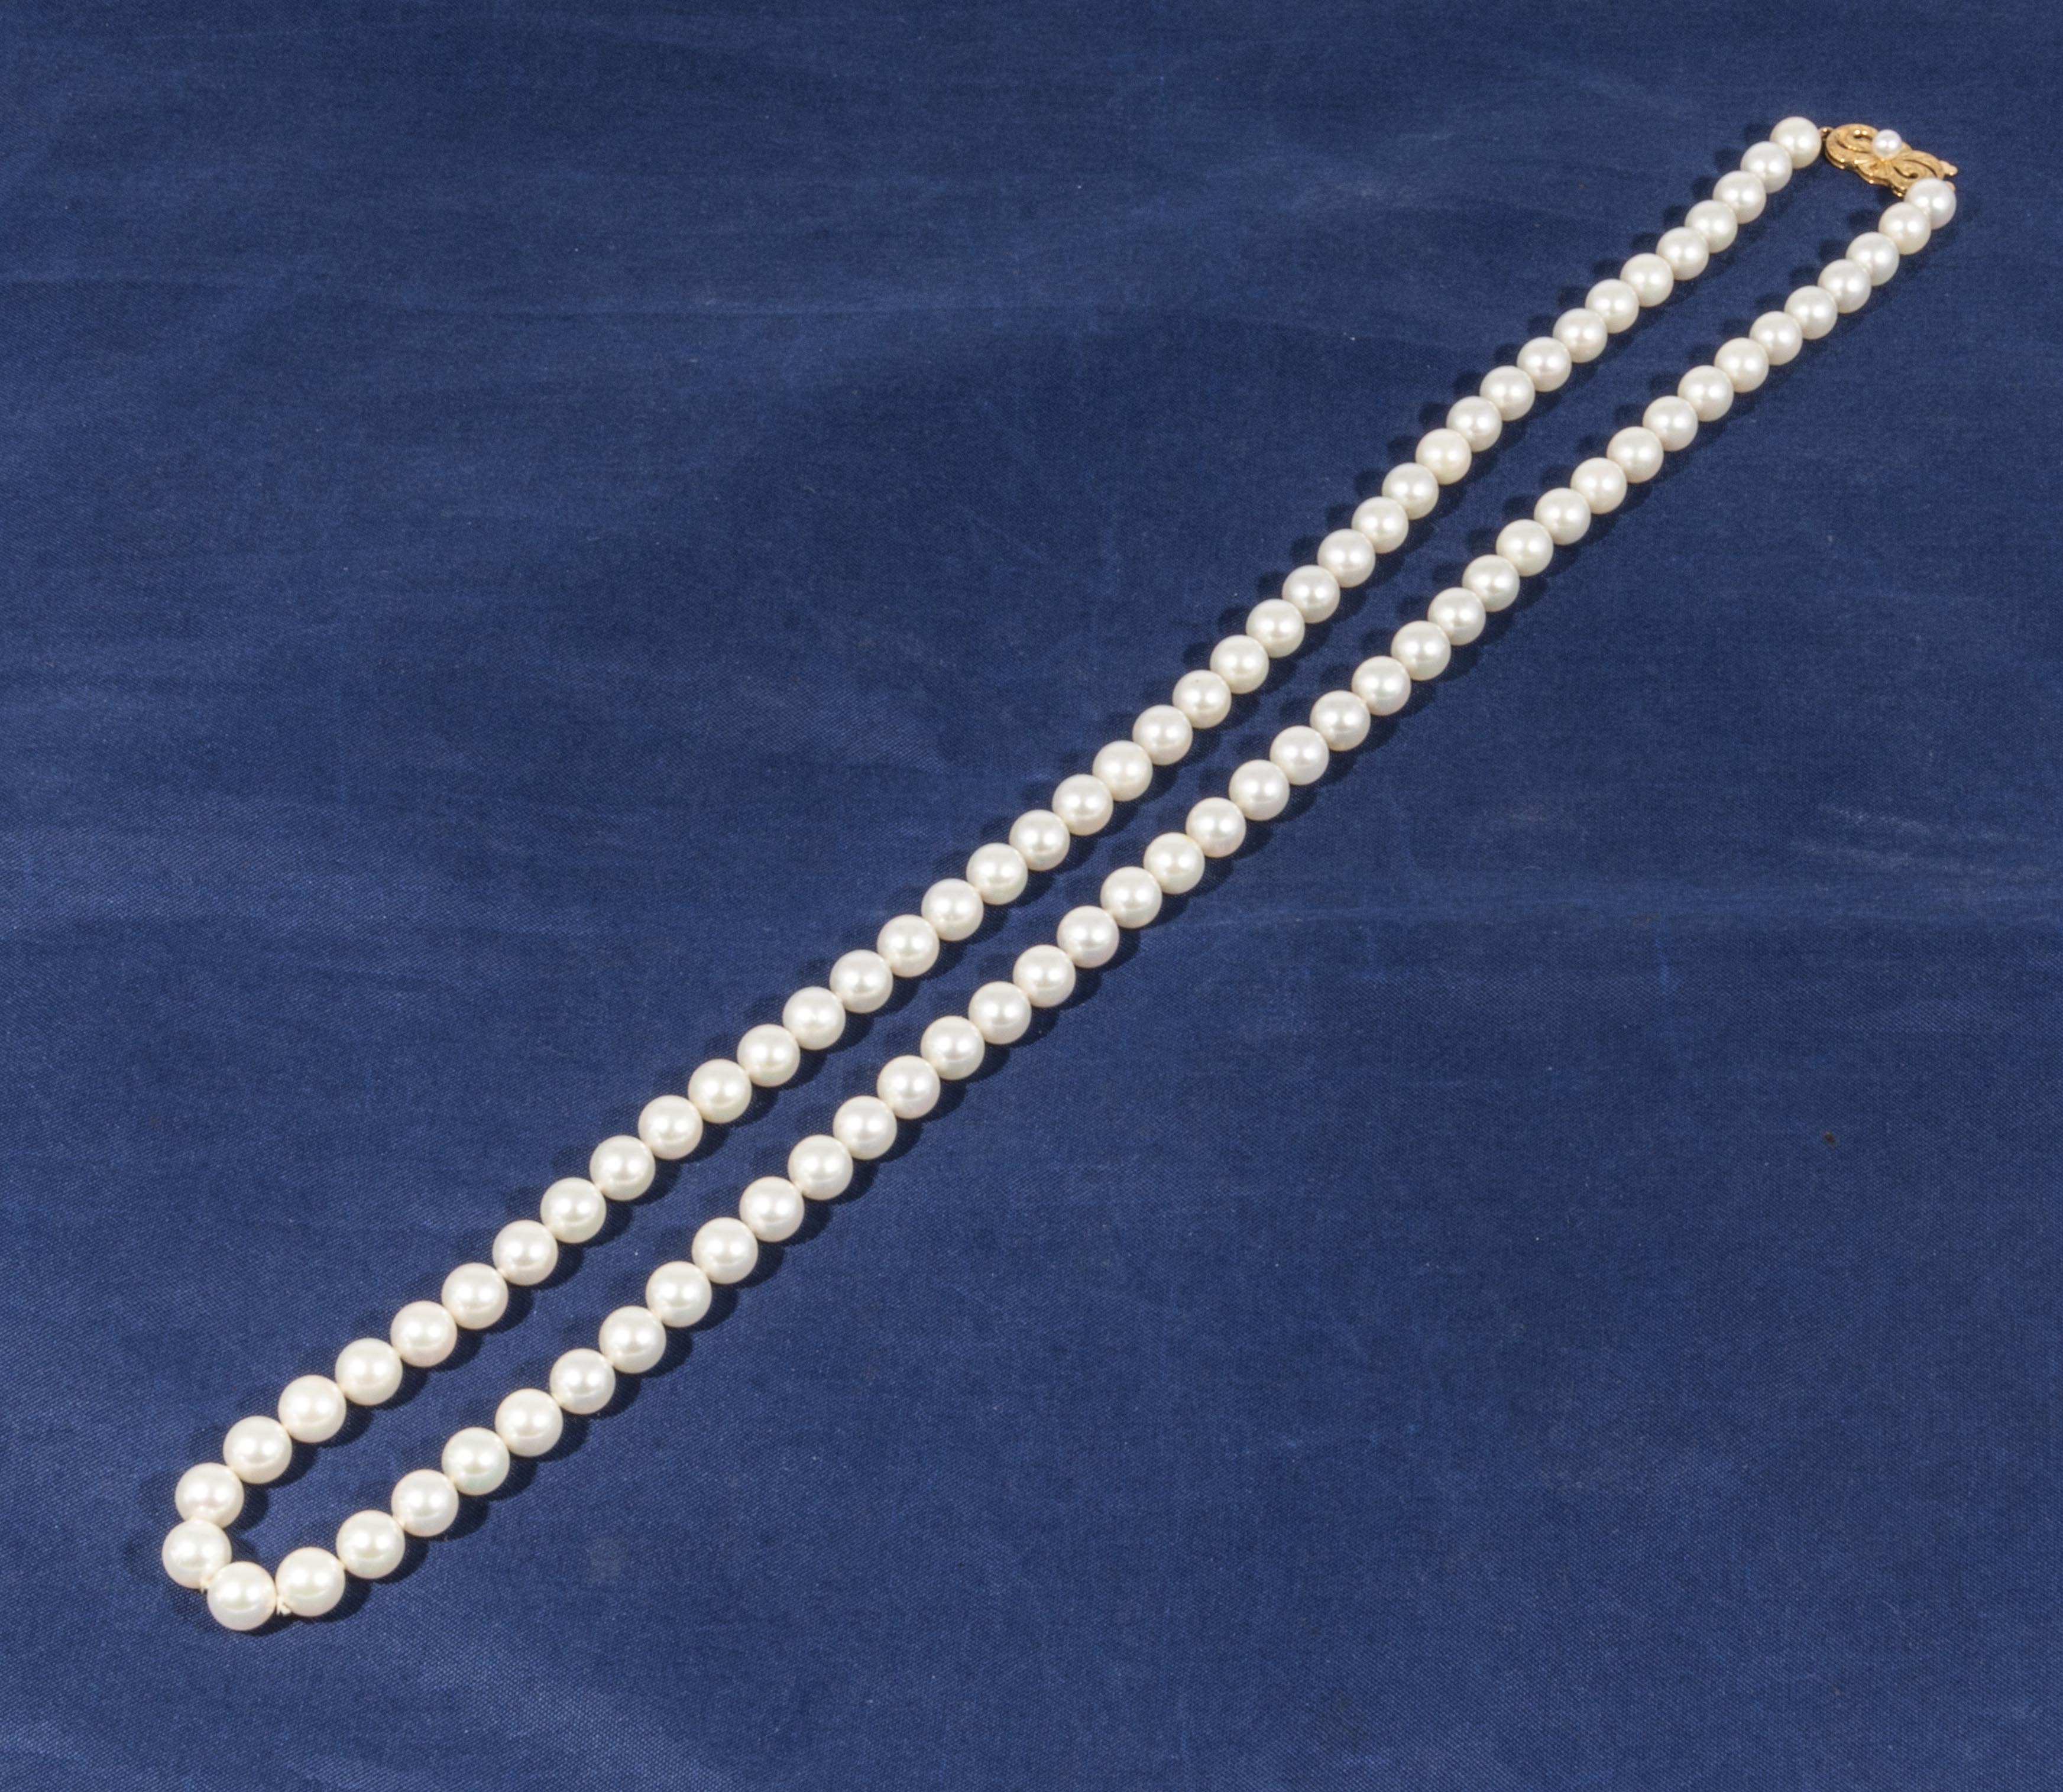 A Mikimoto White South Sea Cultured Pearl Strand Necklace 24 inches, 18ct gold clasp, in original